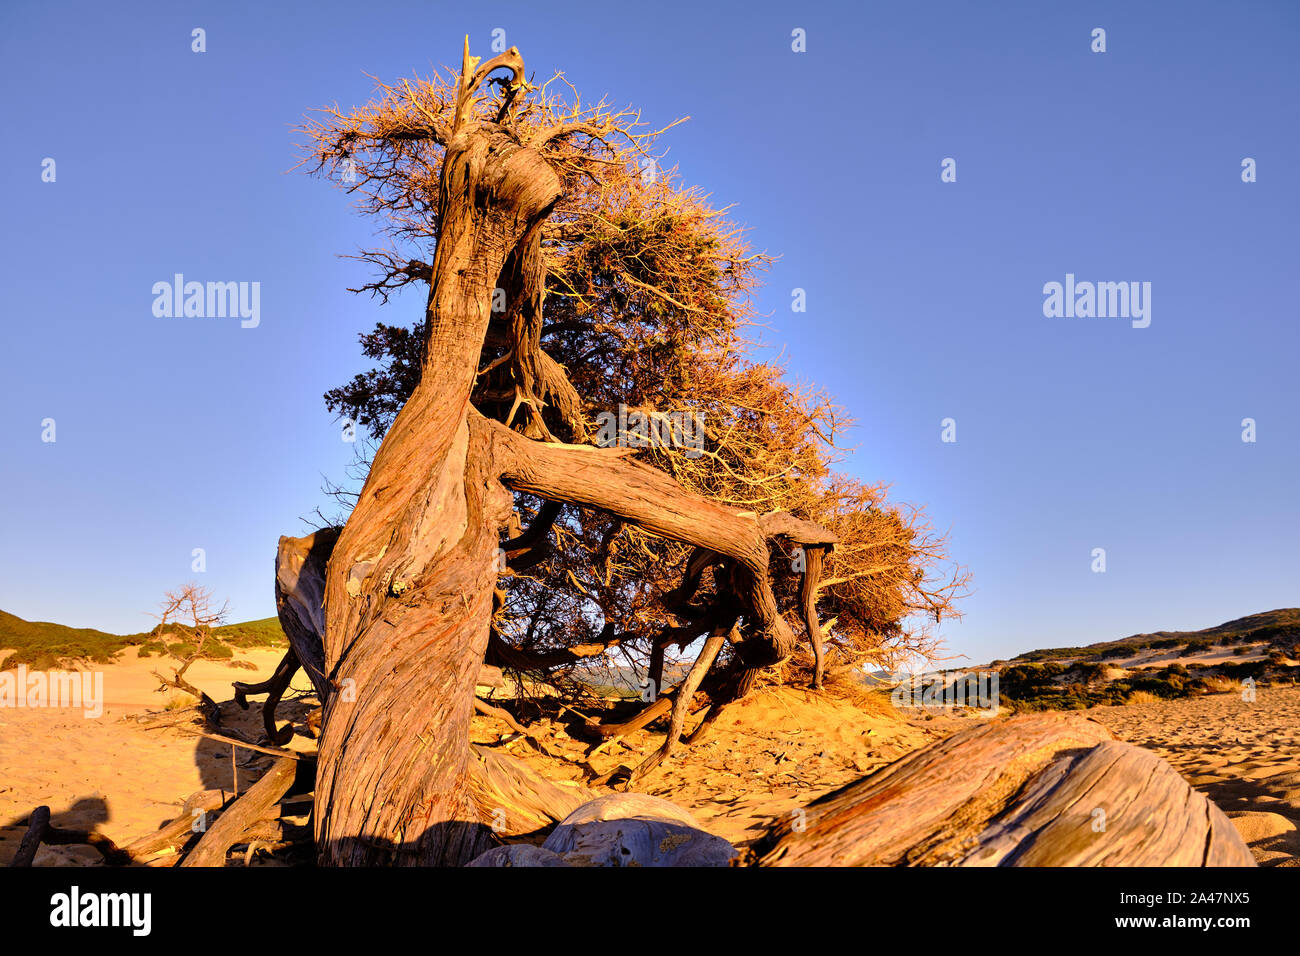 Juniperus molded by the wind in Dune di Piscinas, Sardinian Desert, Arbus, Italy Stock Photo